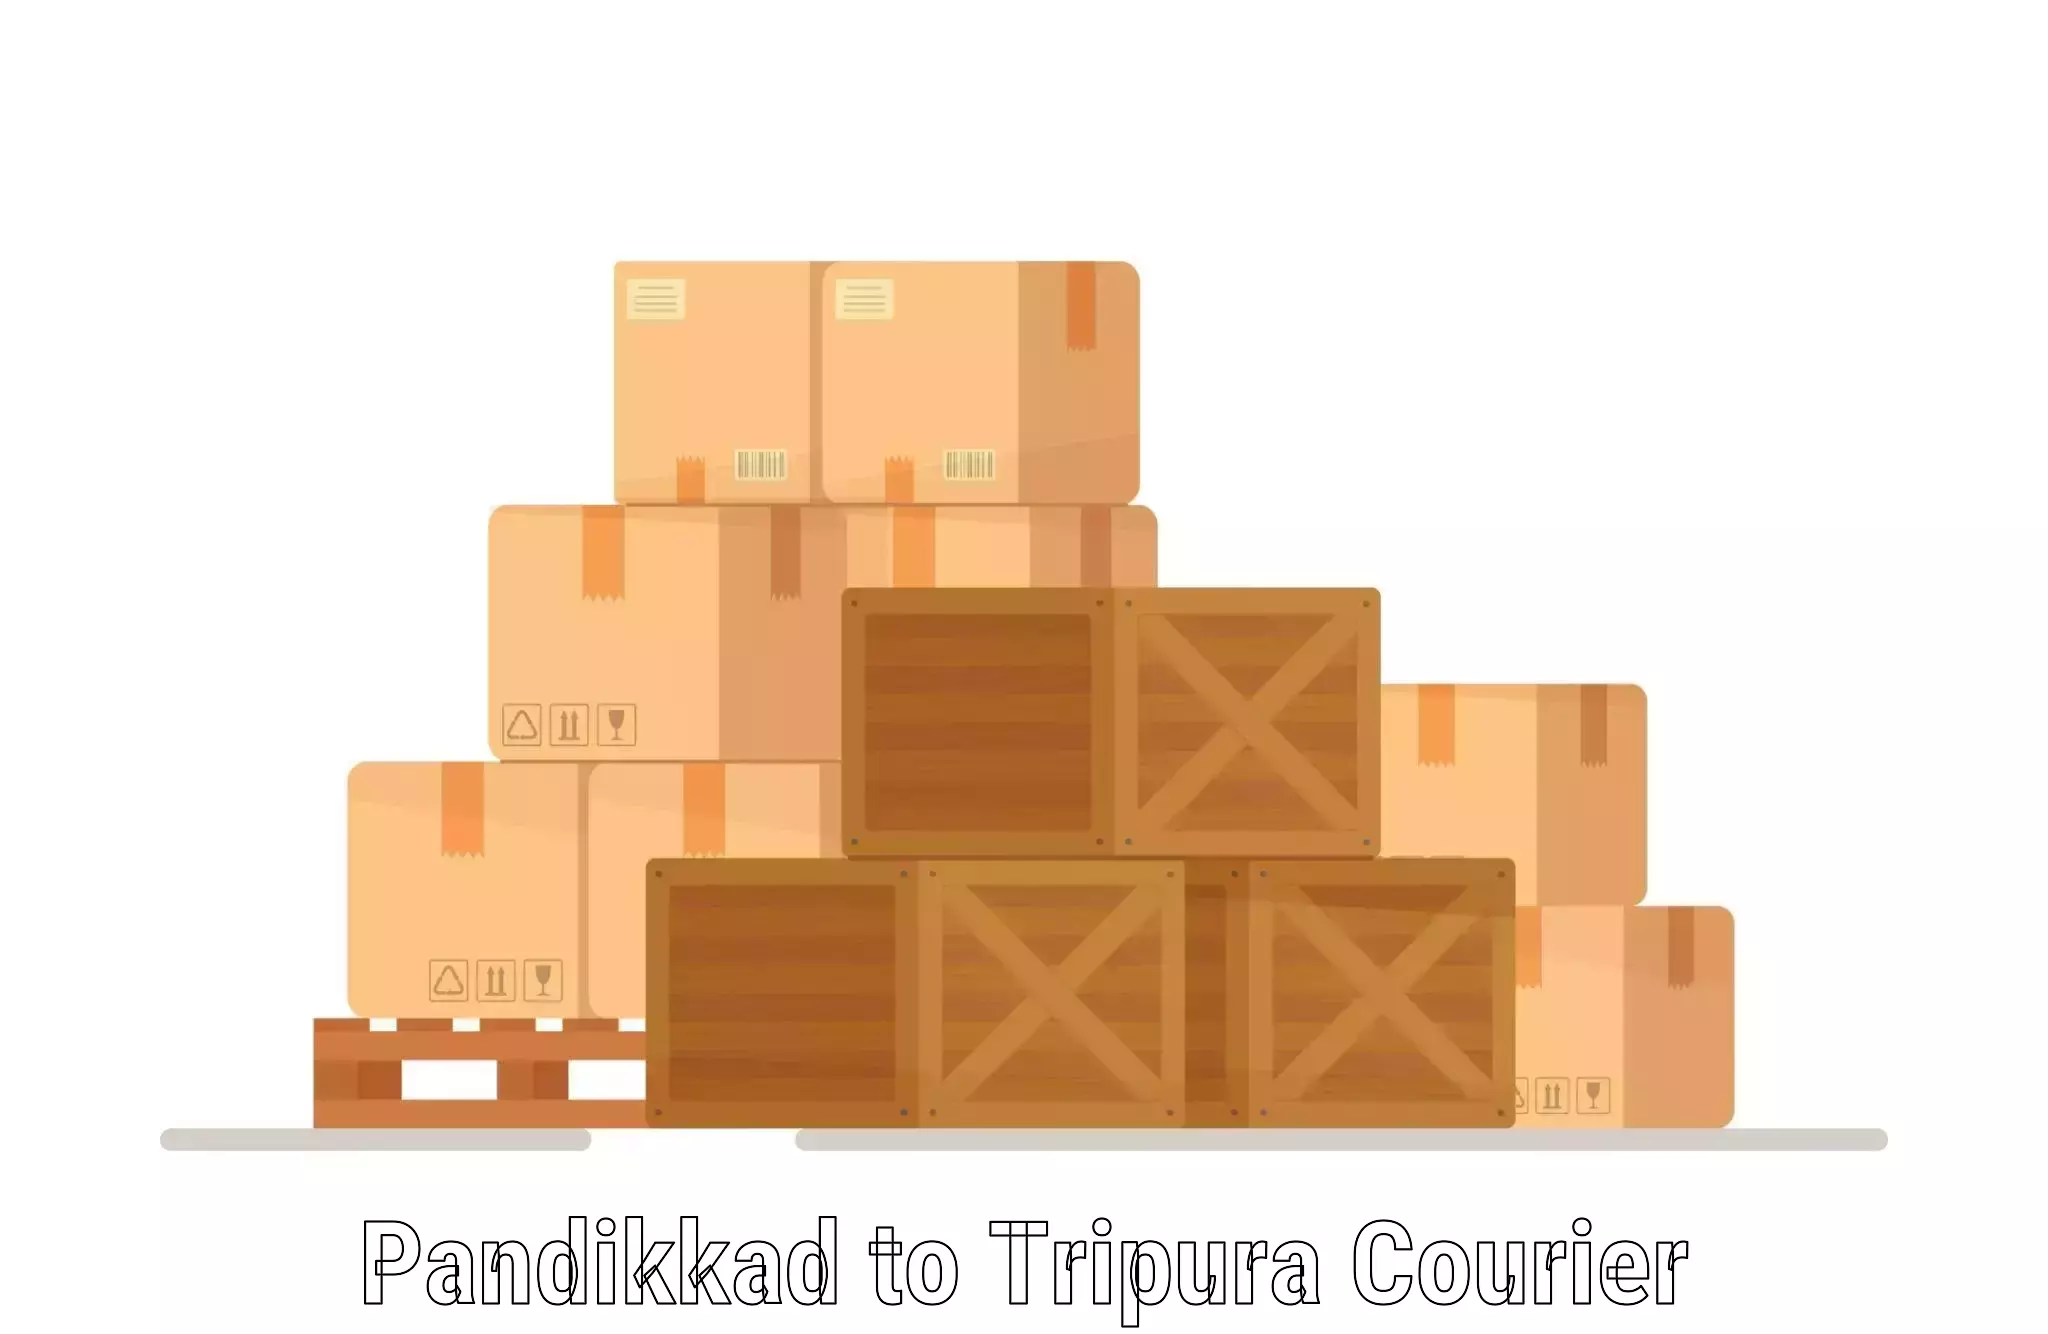 Tech-enabled shipping Pandikkad to Agartala